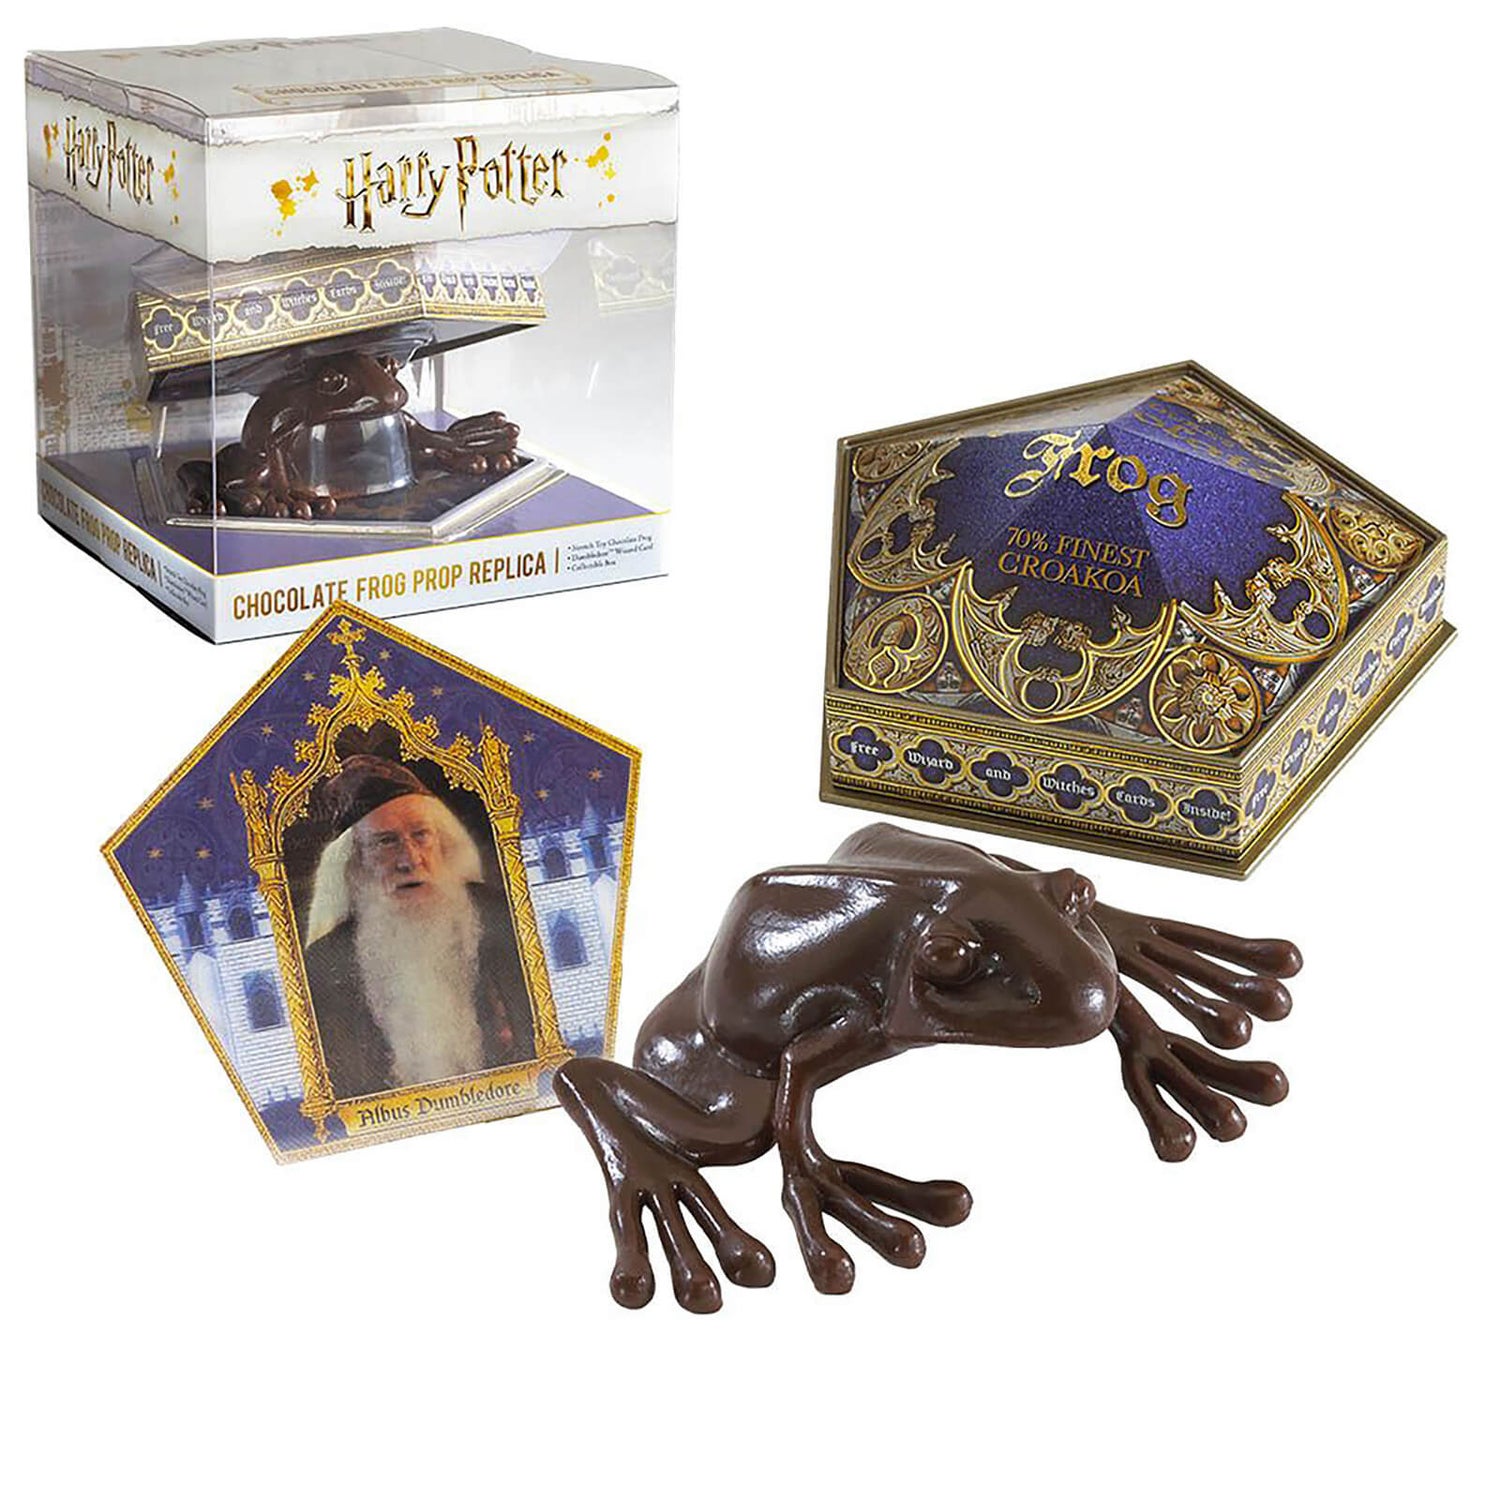 Harry Potter chocolade kikker replica